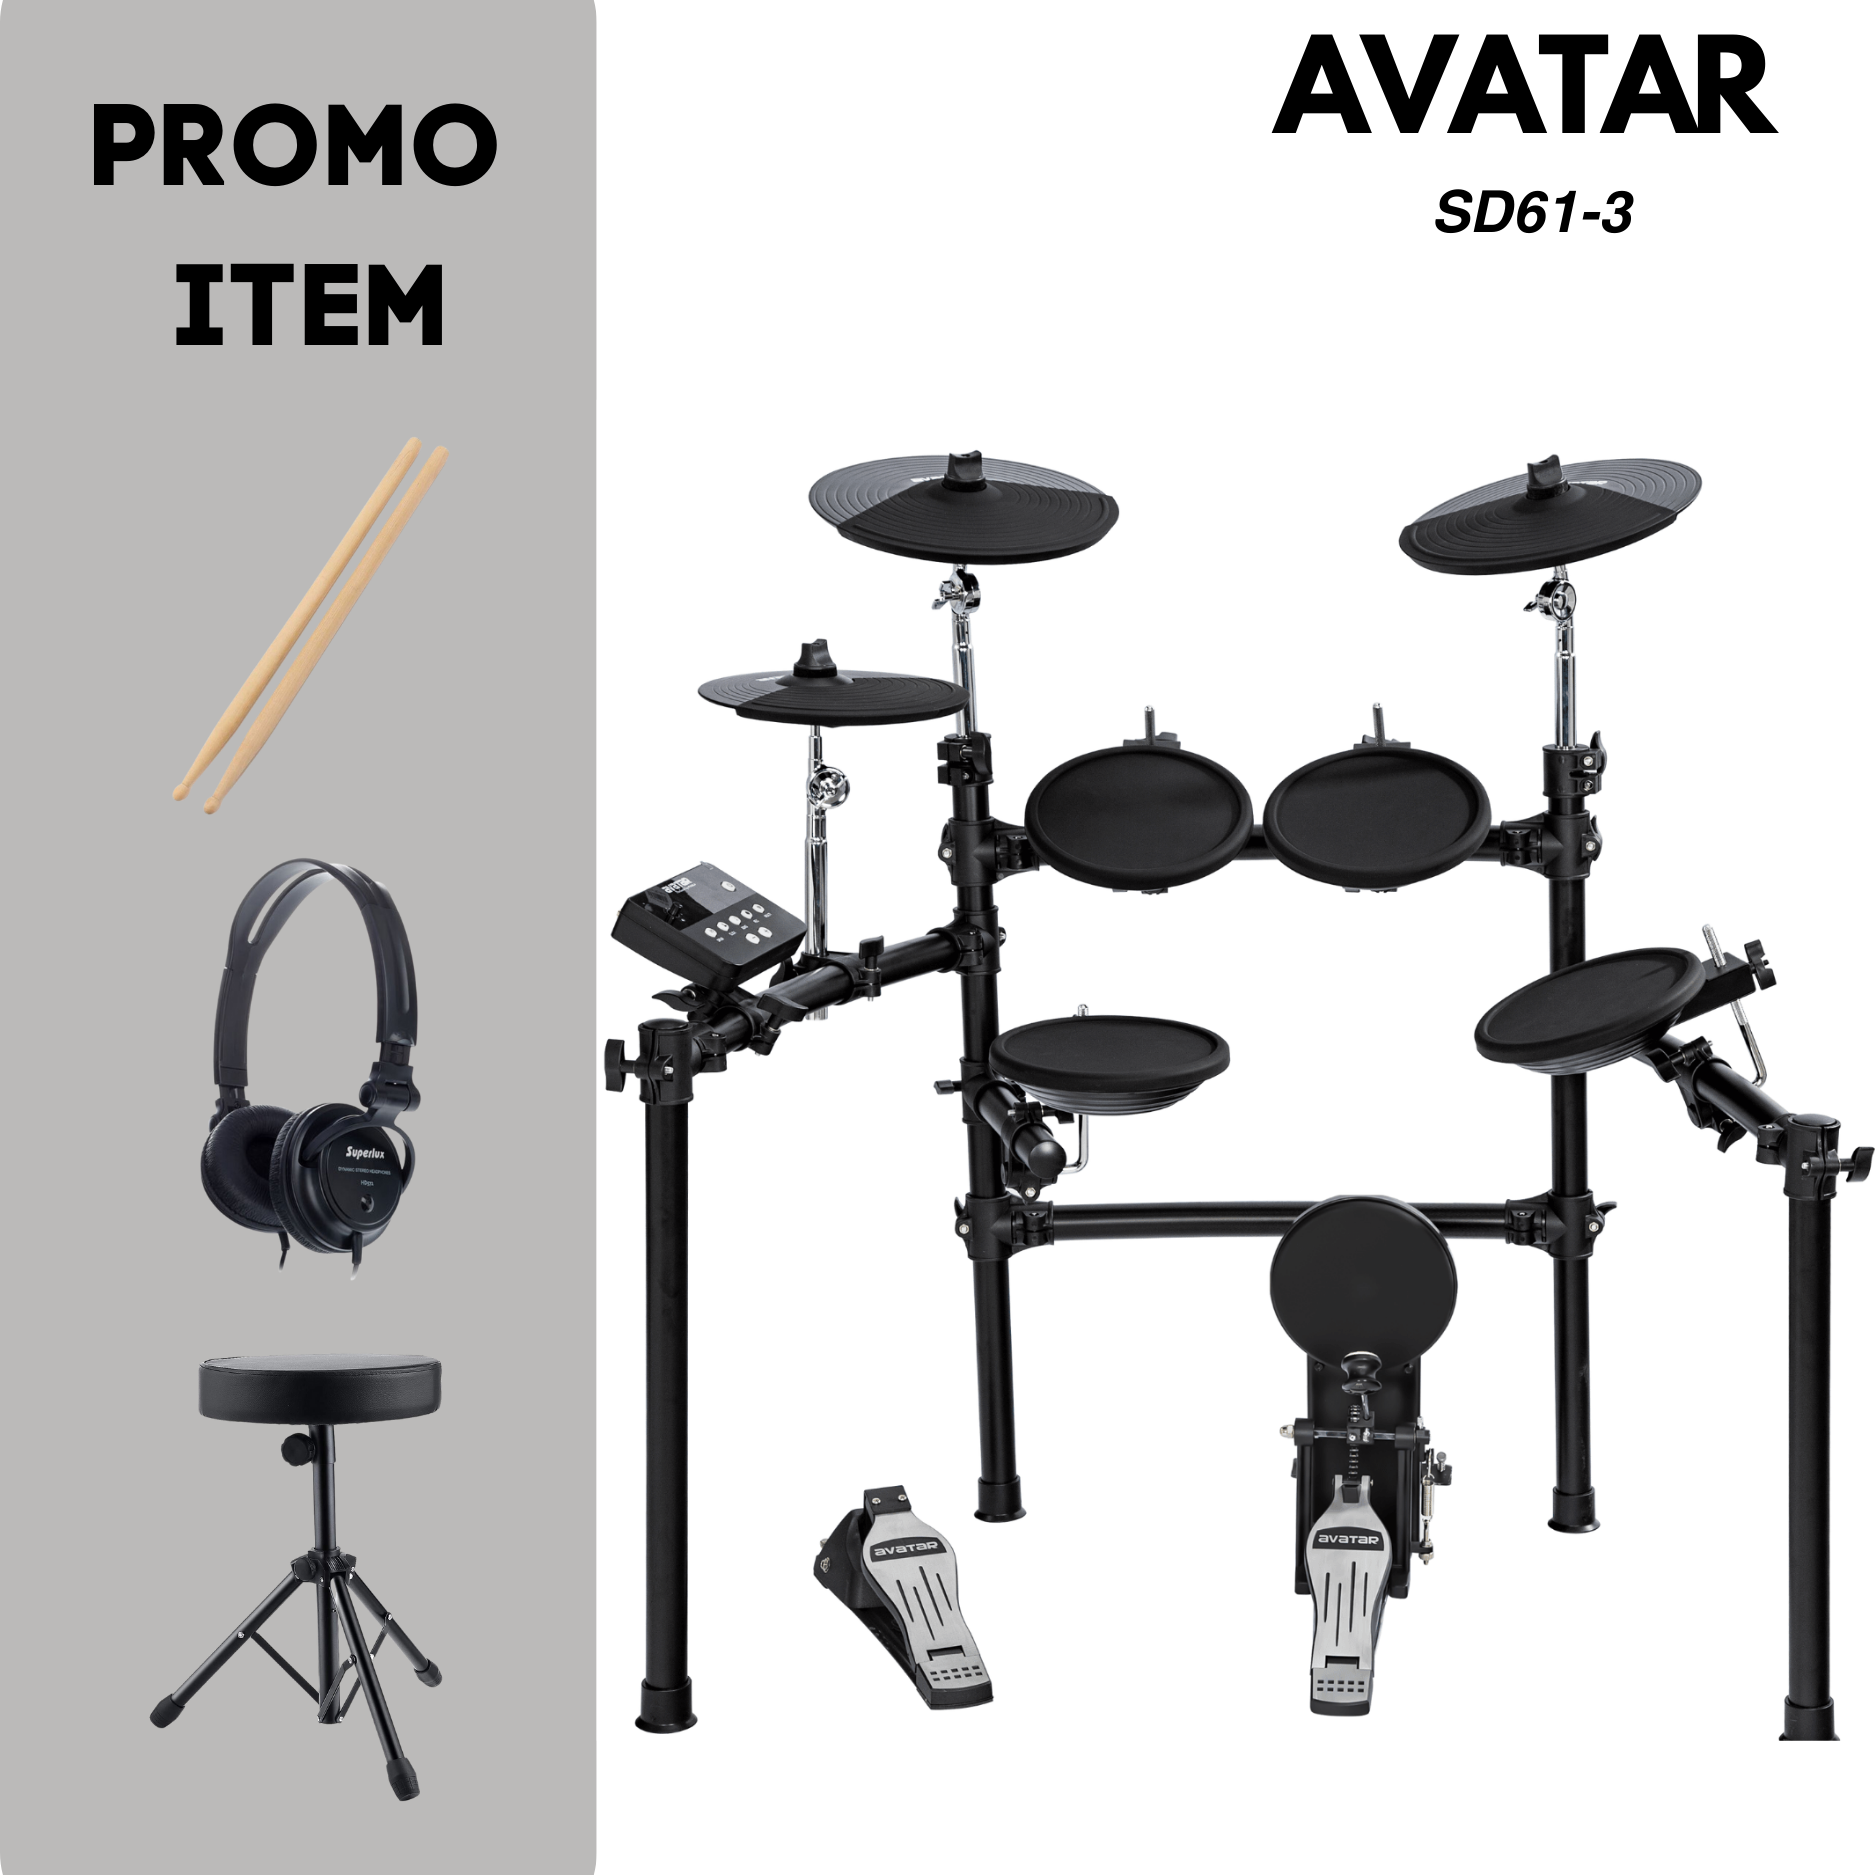 Avatar SD61-3 Digital Drumkit Set with Superlux HD572 Headphone, Drum Throne, Drumsticks